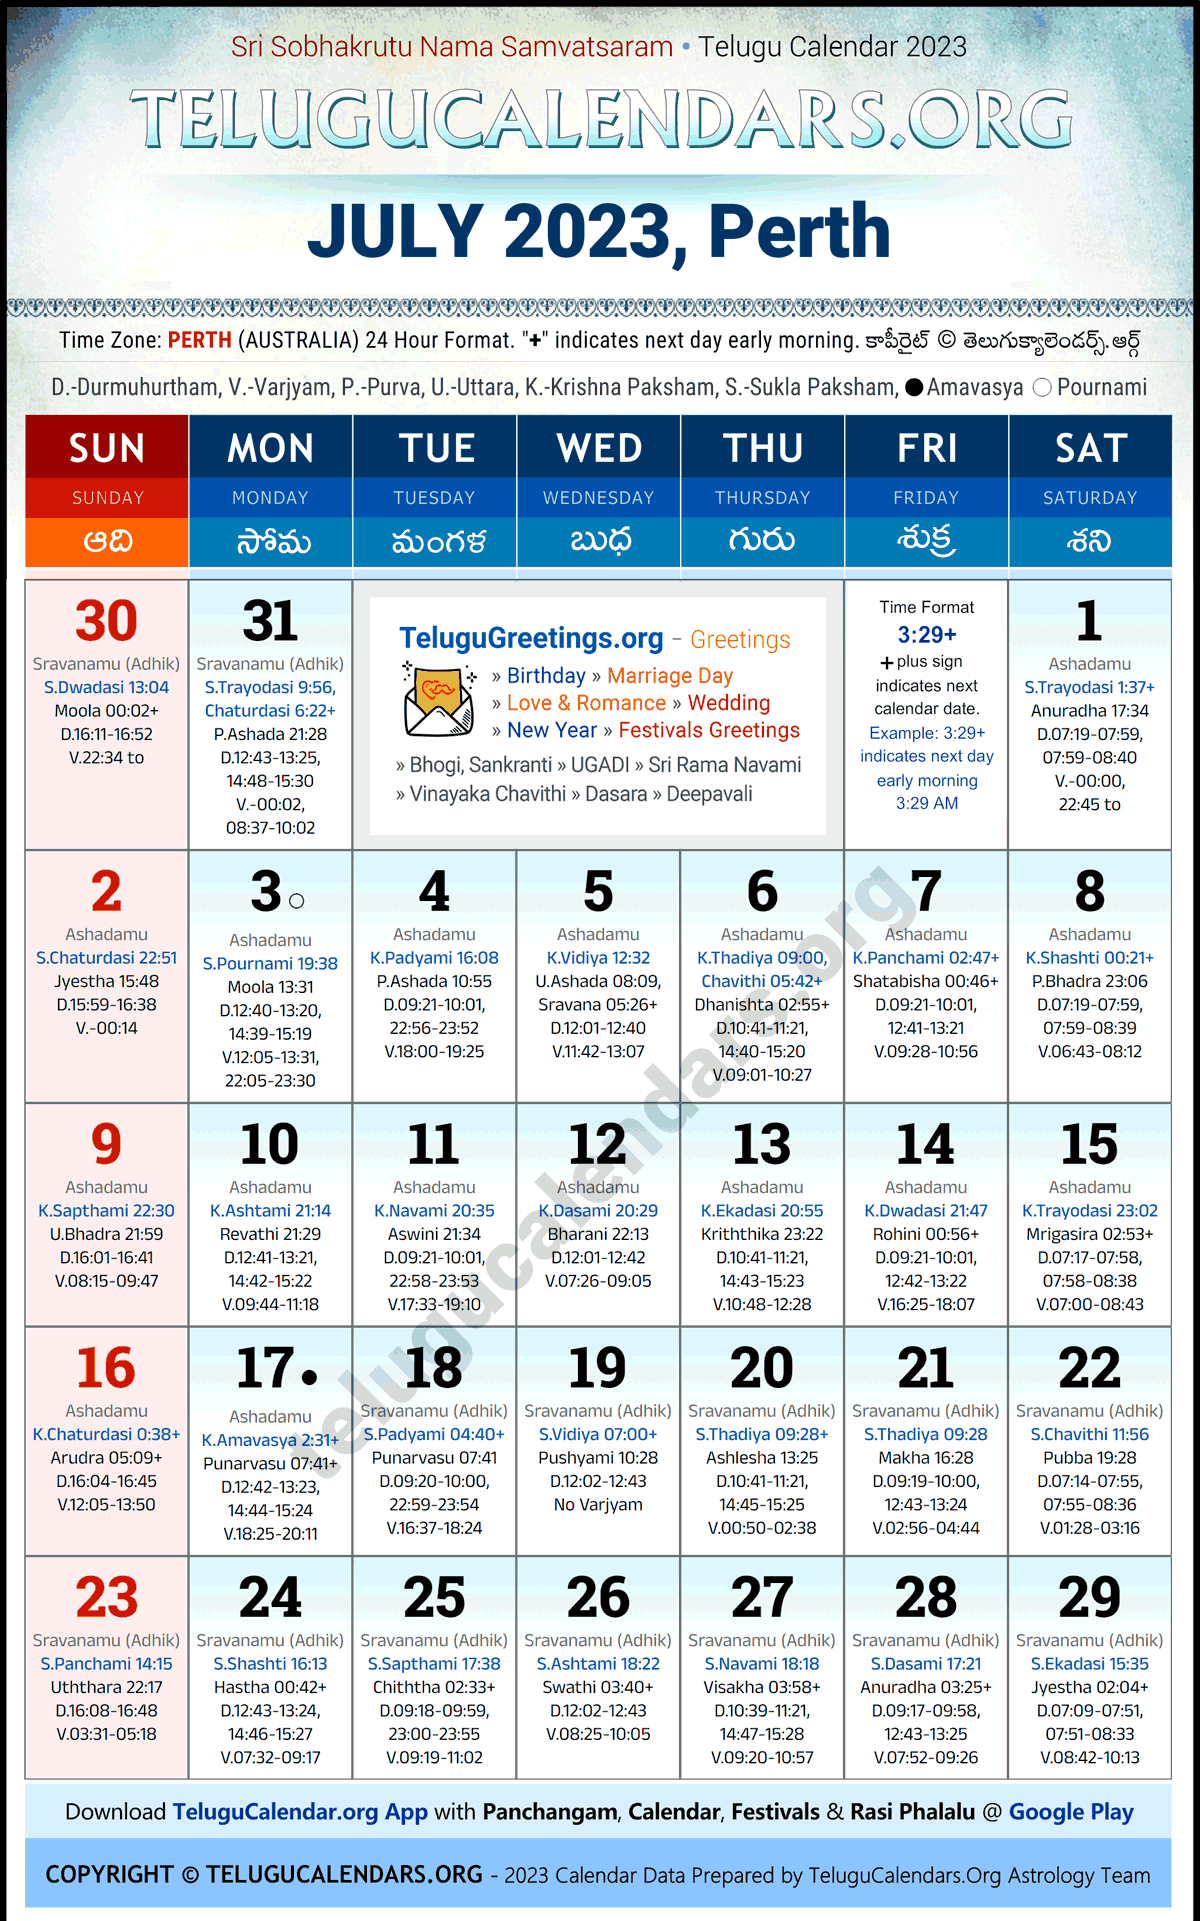 Telugu Calendar 2023 July Festivals for Perth